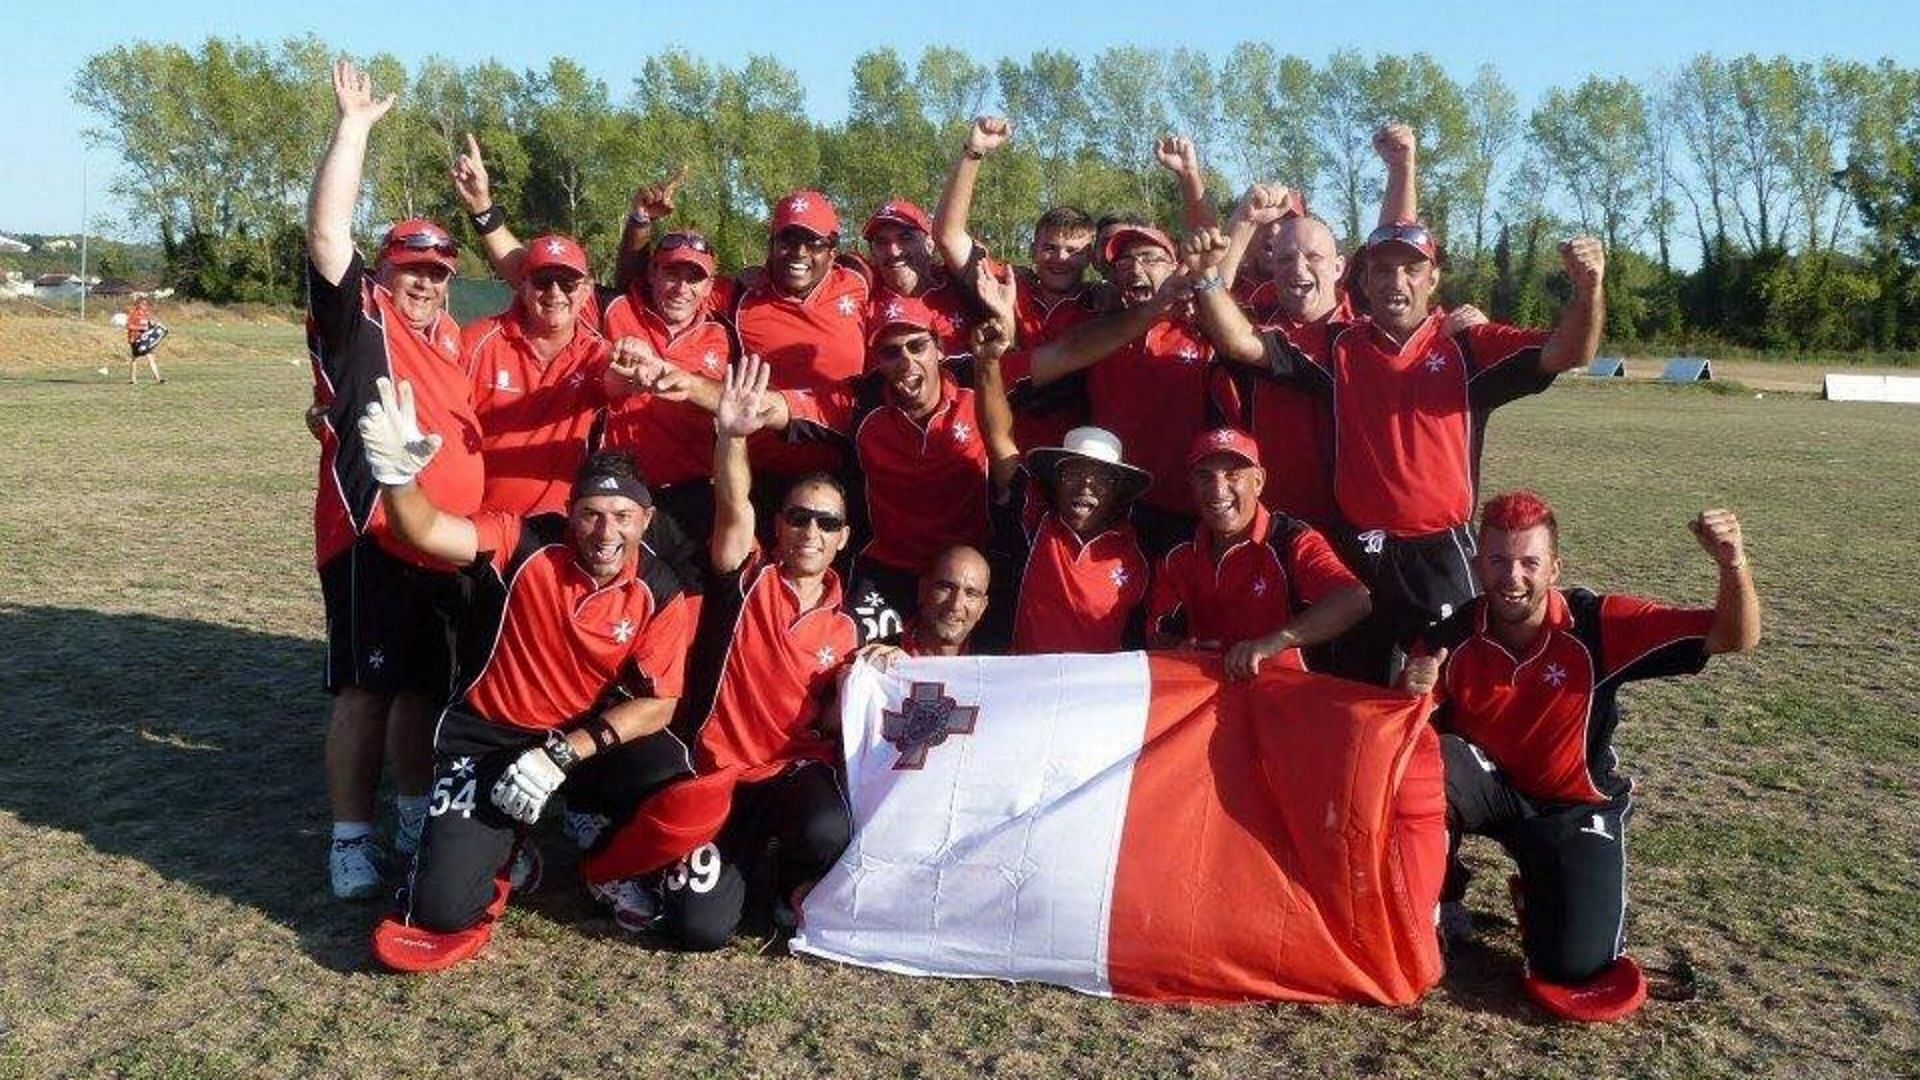 The Malta Cricket team poses for a group photo (Image Courtesy: International Cricket Council)